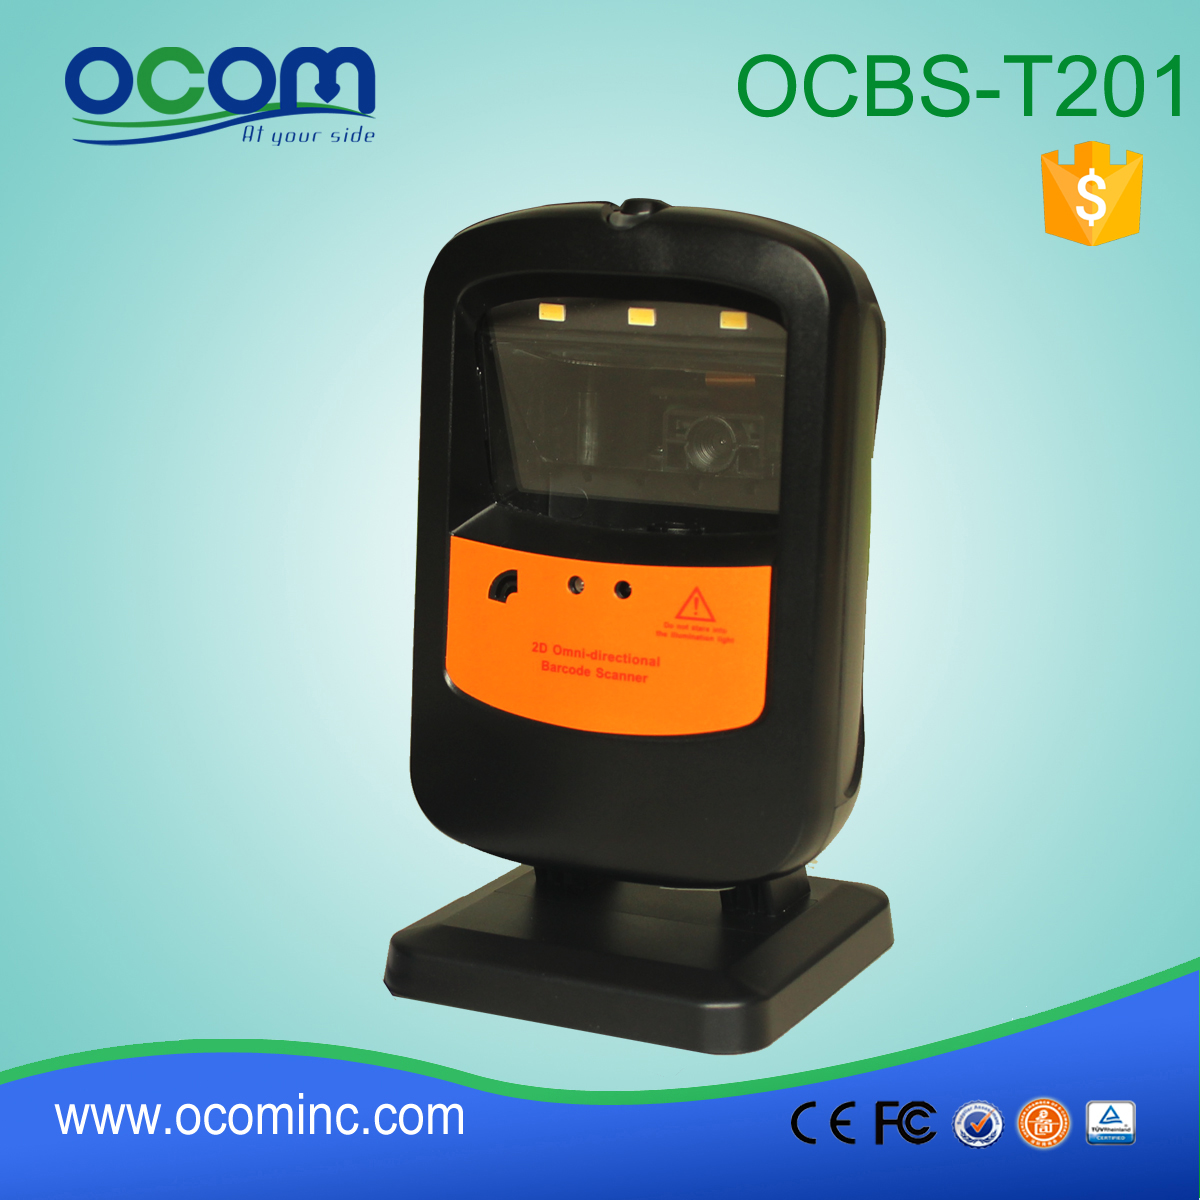 OCBS-T201: niedrigster 2d Barcodescanner, fest montierte Barcodescanner